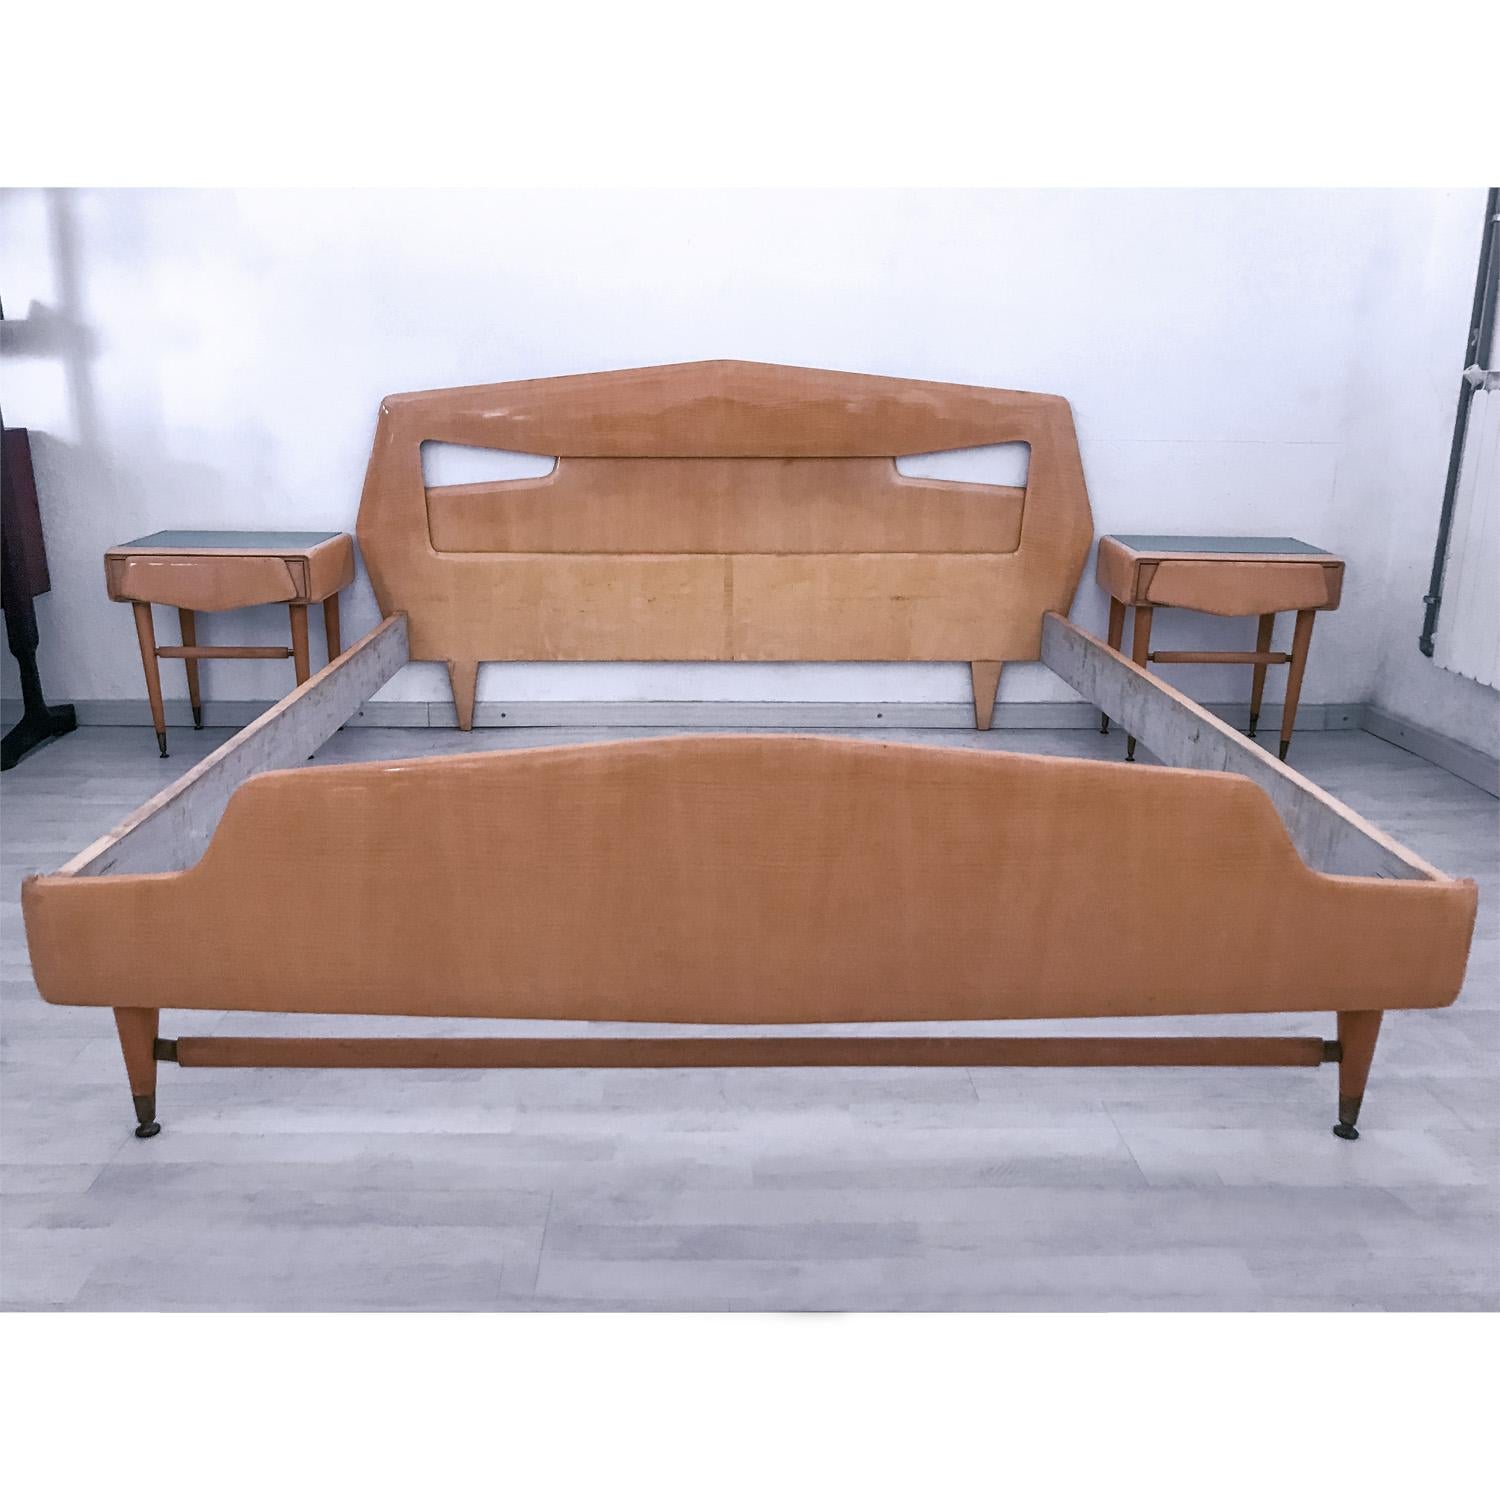 Mid-Century Modern Italian Mid-Century Bed with Bedside Tables attr. to Silvio Cavatorta, 1950s